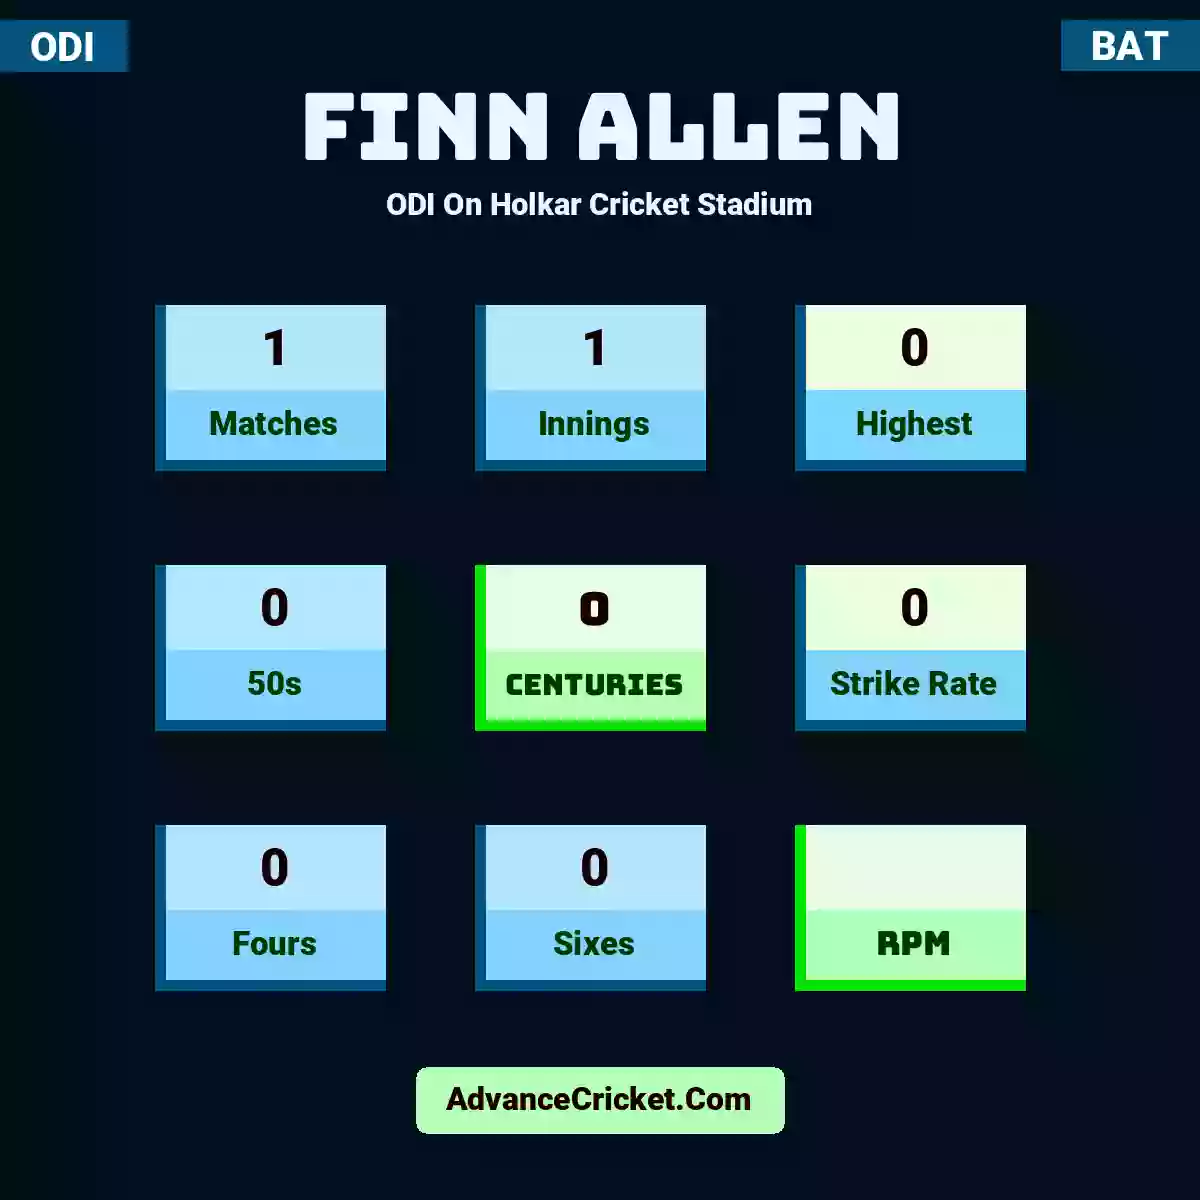 Finn Allen ODI  On Holkar Cricket Stadium, Finn Allen played 1 matches, scored 0 runs as highest, 0 half-centuries, and 0 centuries, with a strike rate of 0. F.Allen hit 0 fours and 0 sixes.